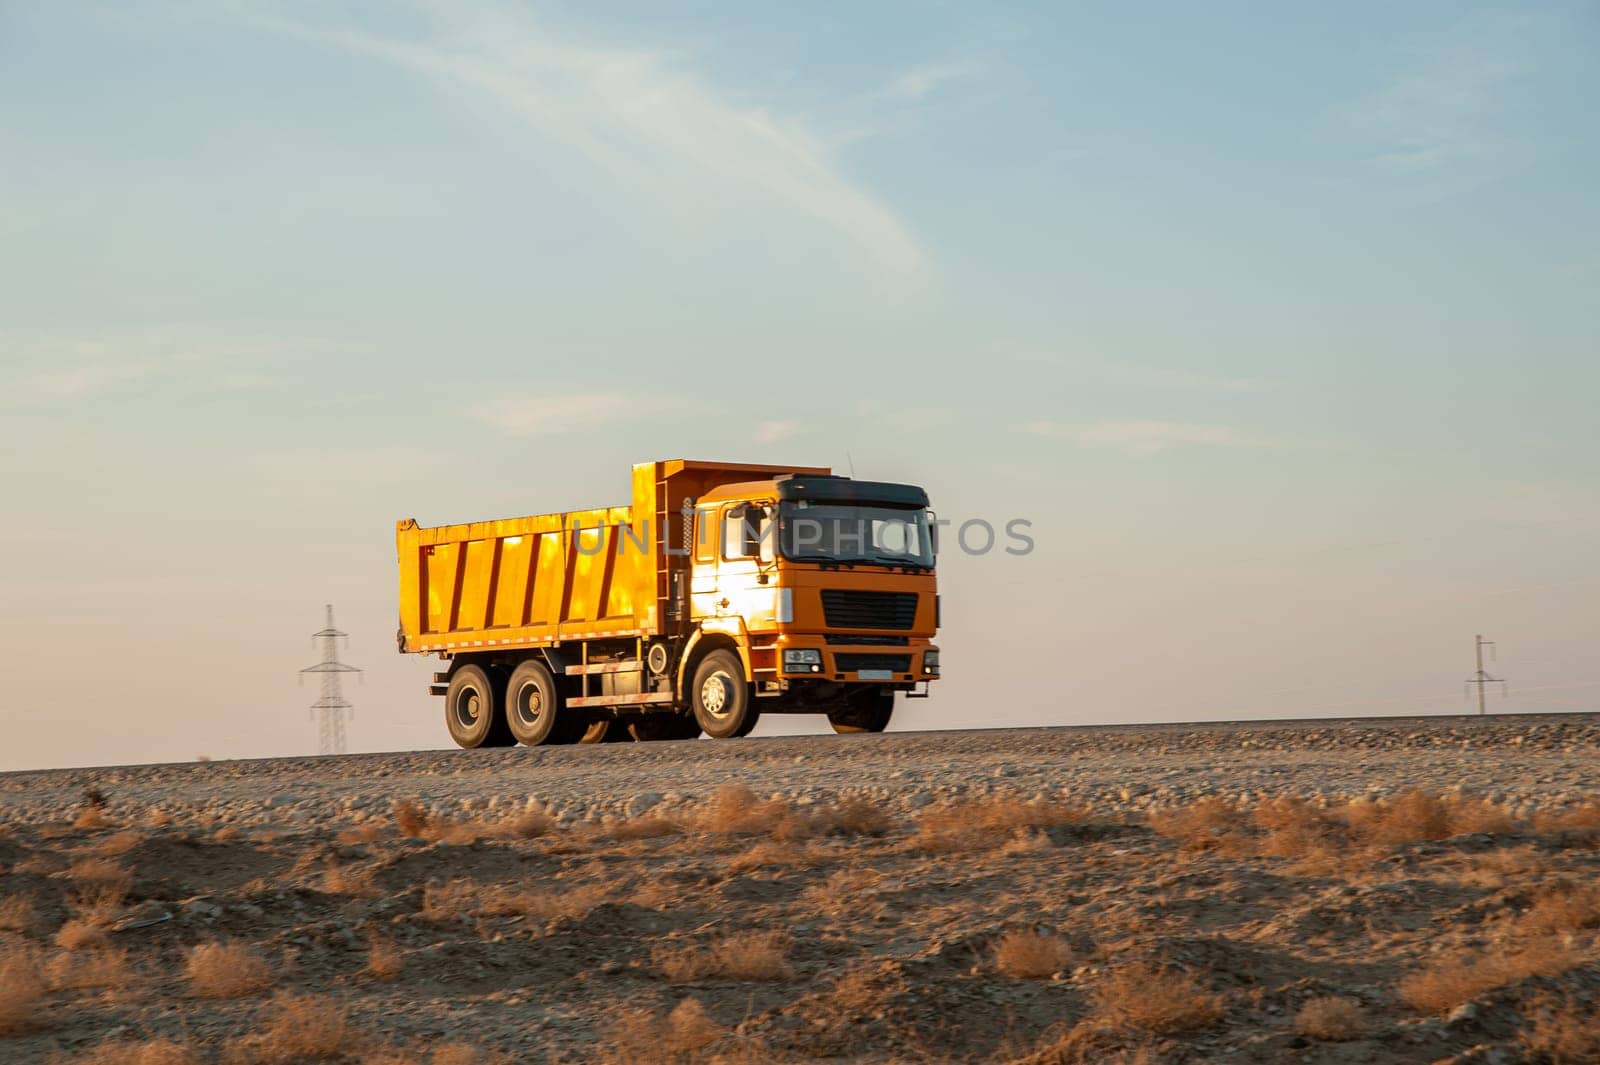 An orange dumper truck in an construction area by A_Karim